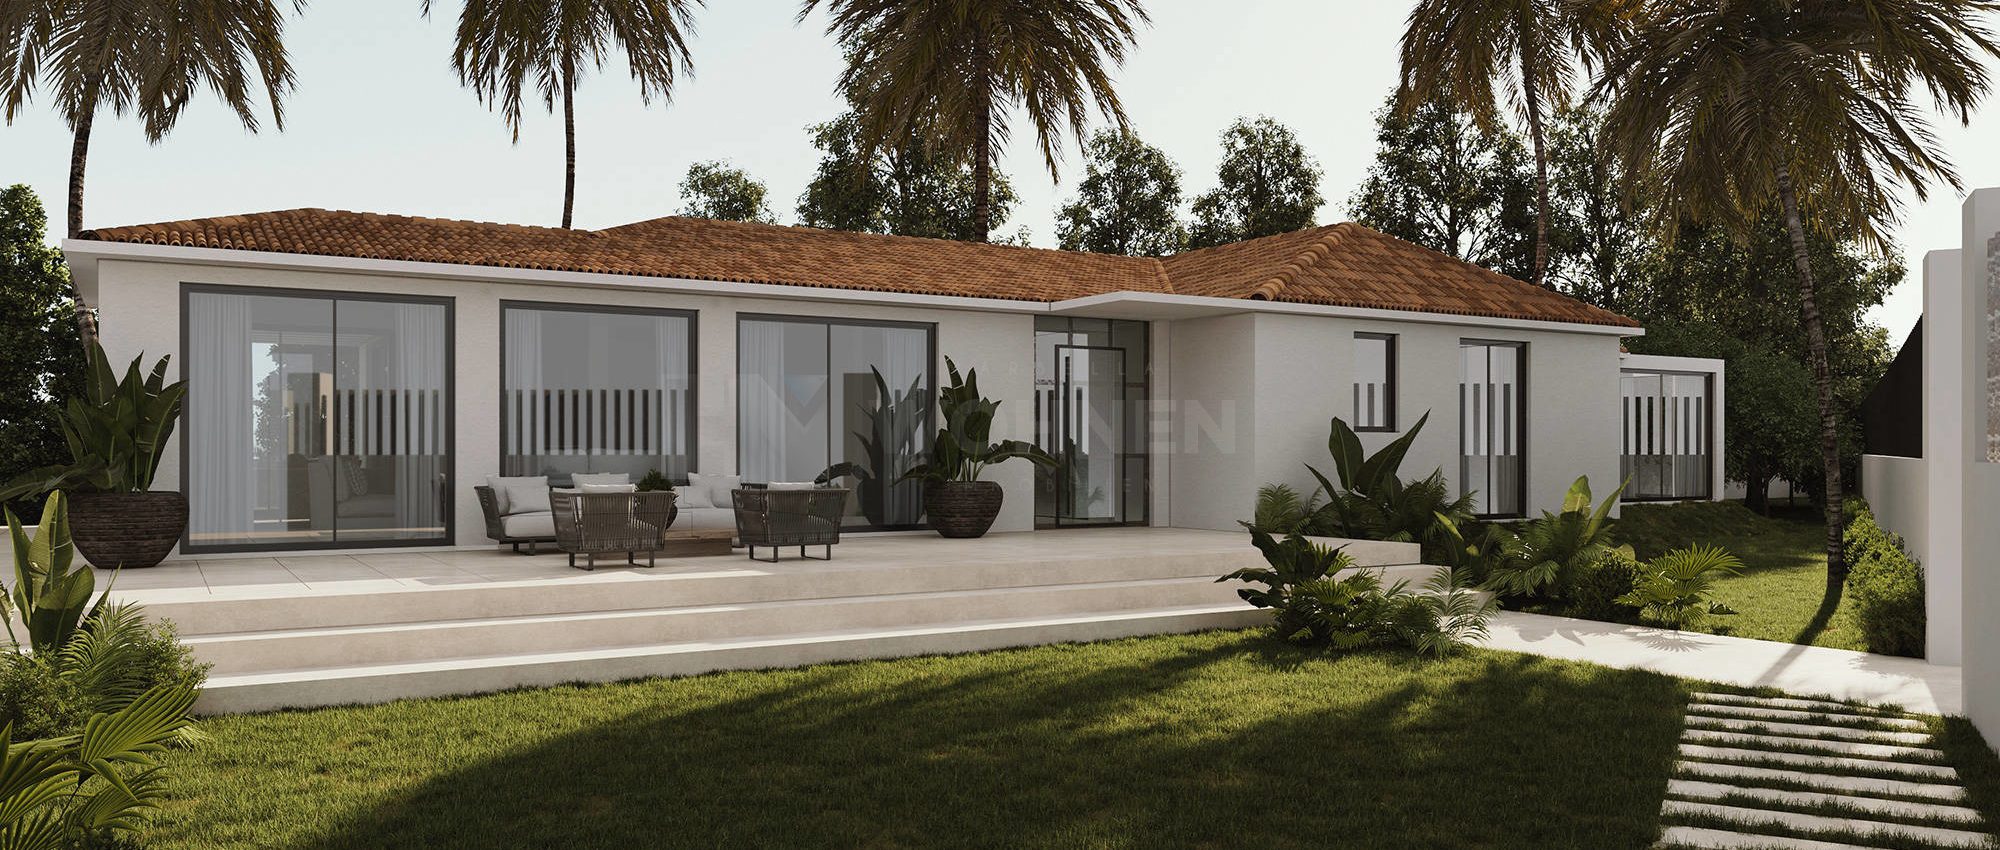 Moderne Villa komplett renoviert zu hohen Standards